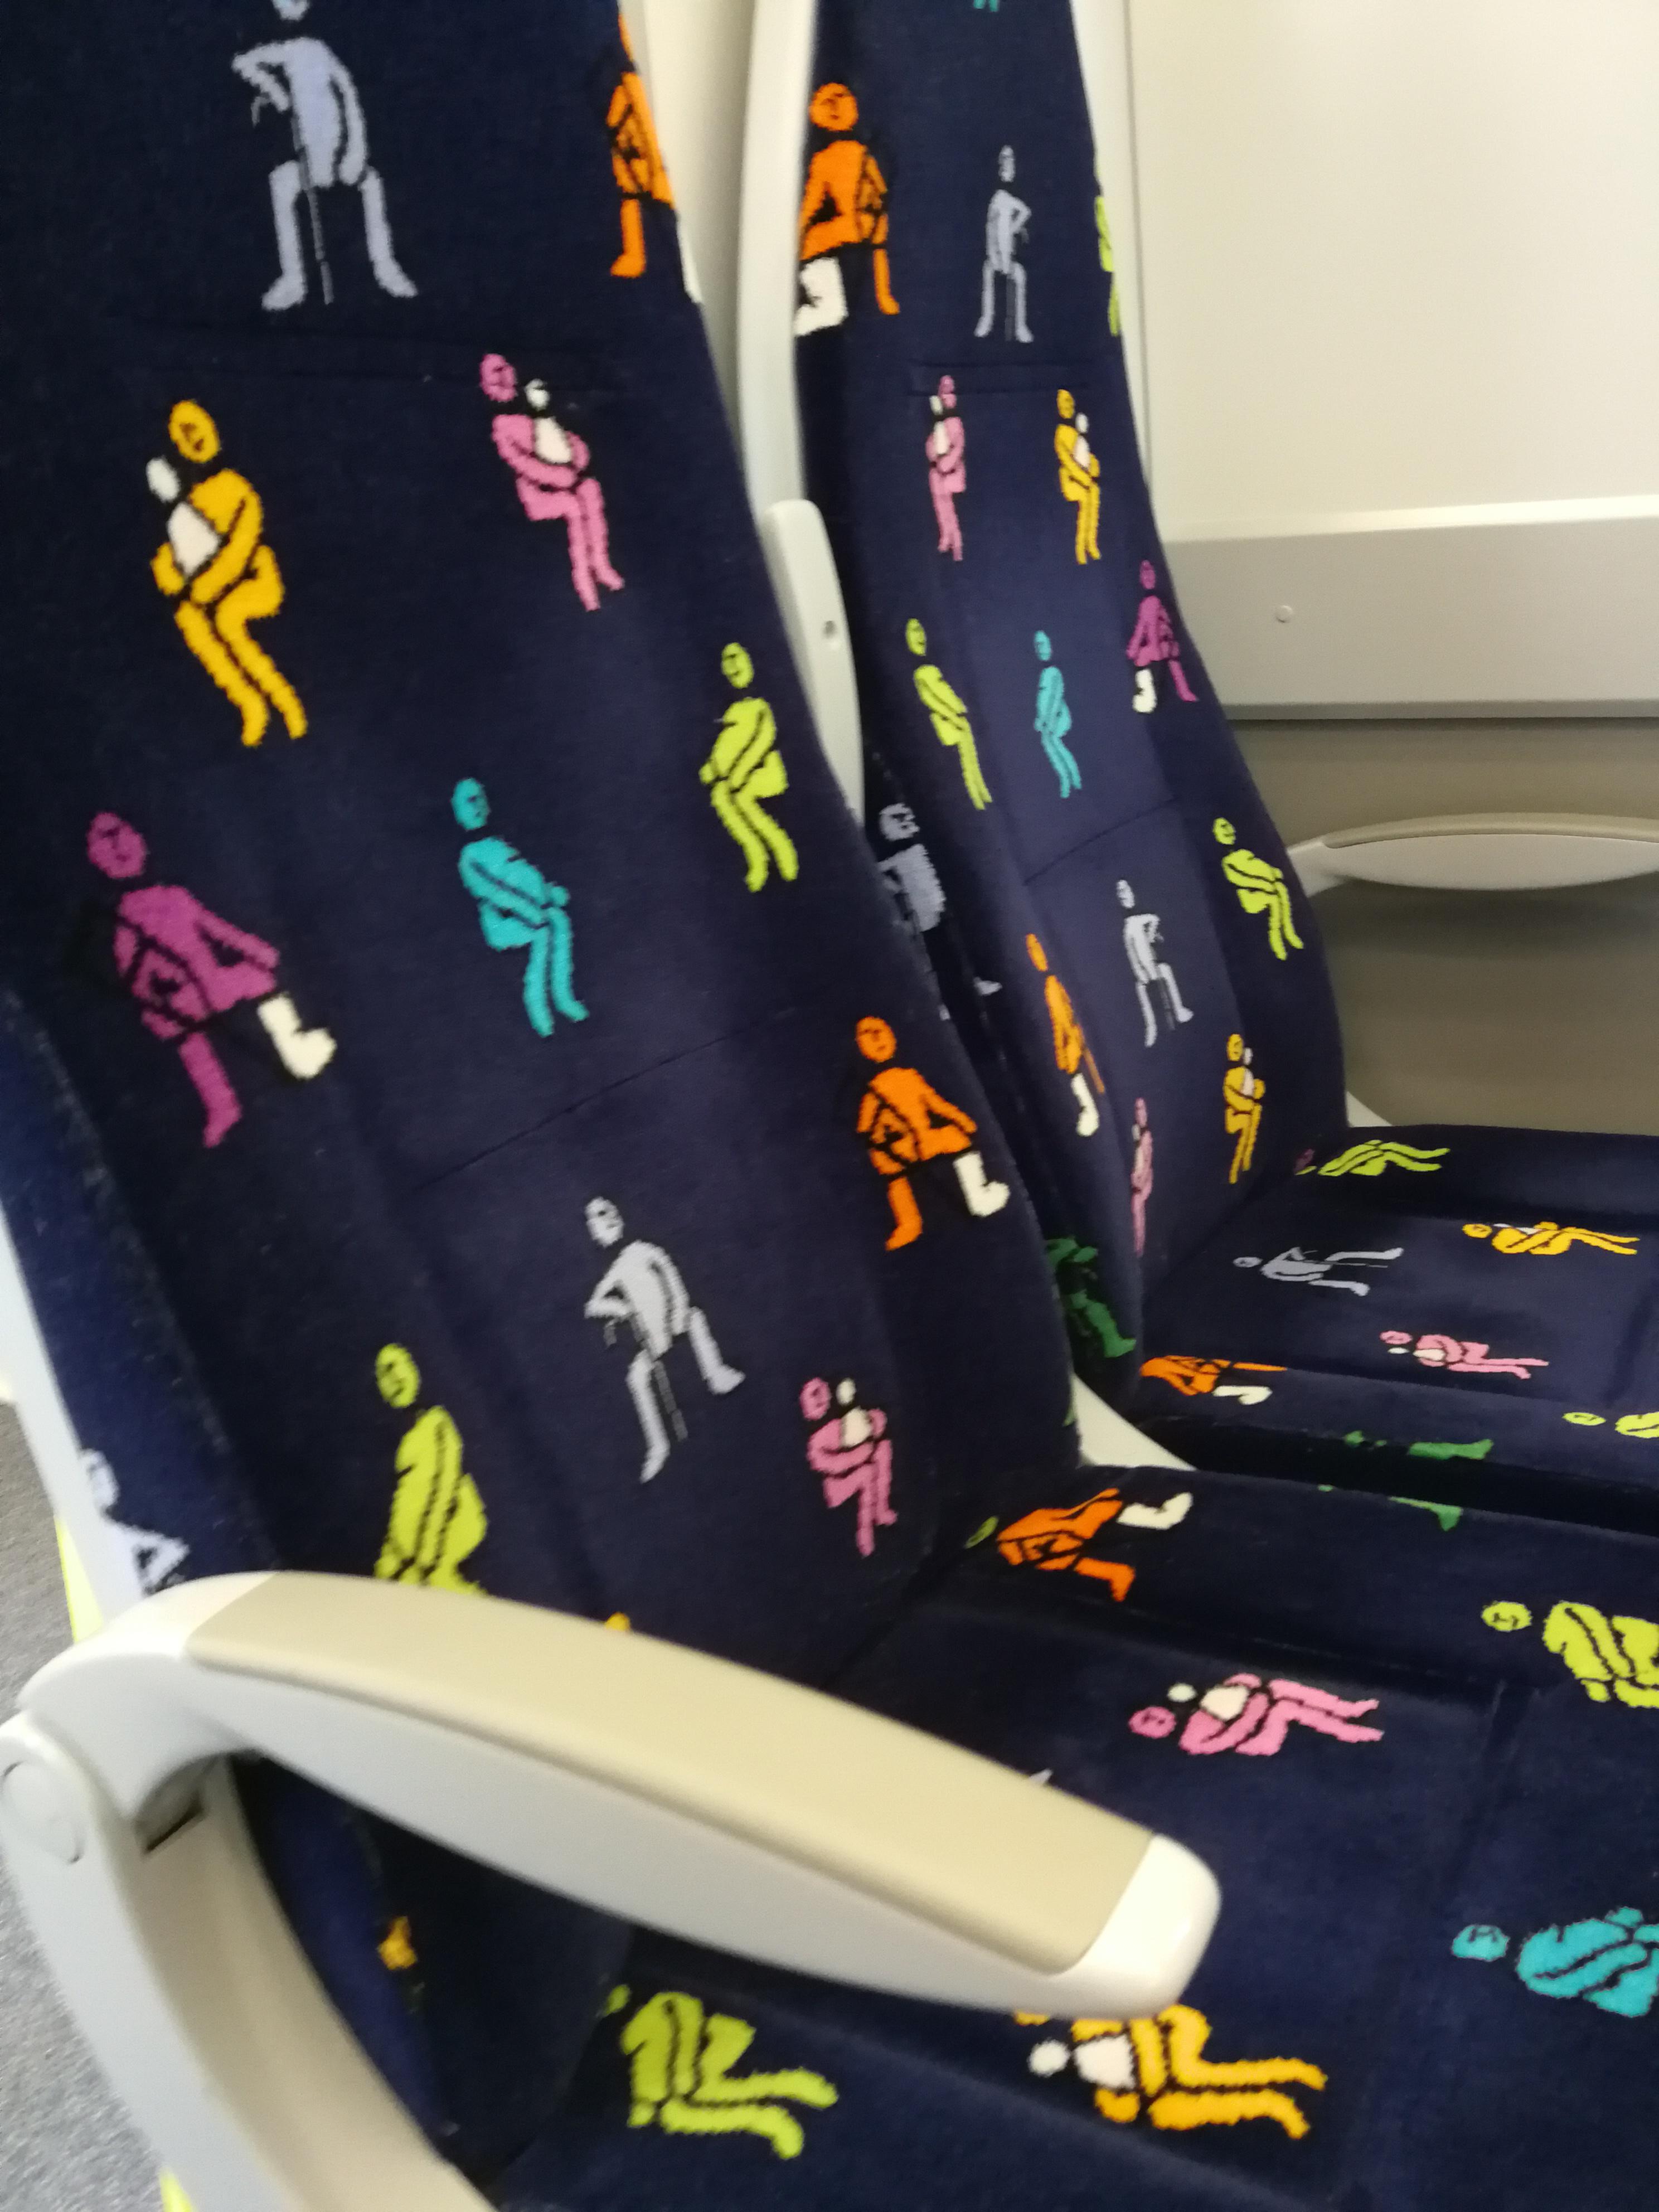 Priority seating on Scottish trains.